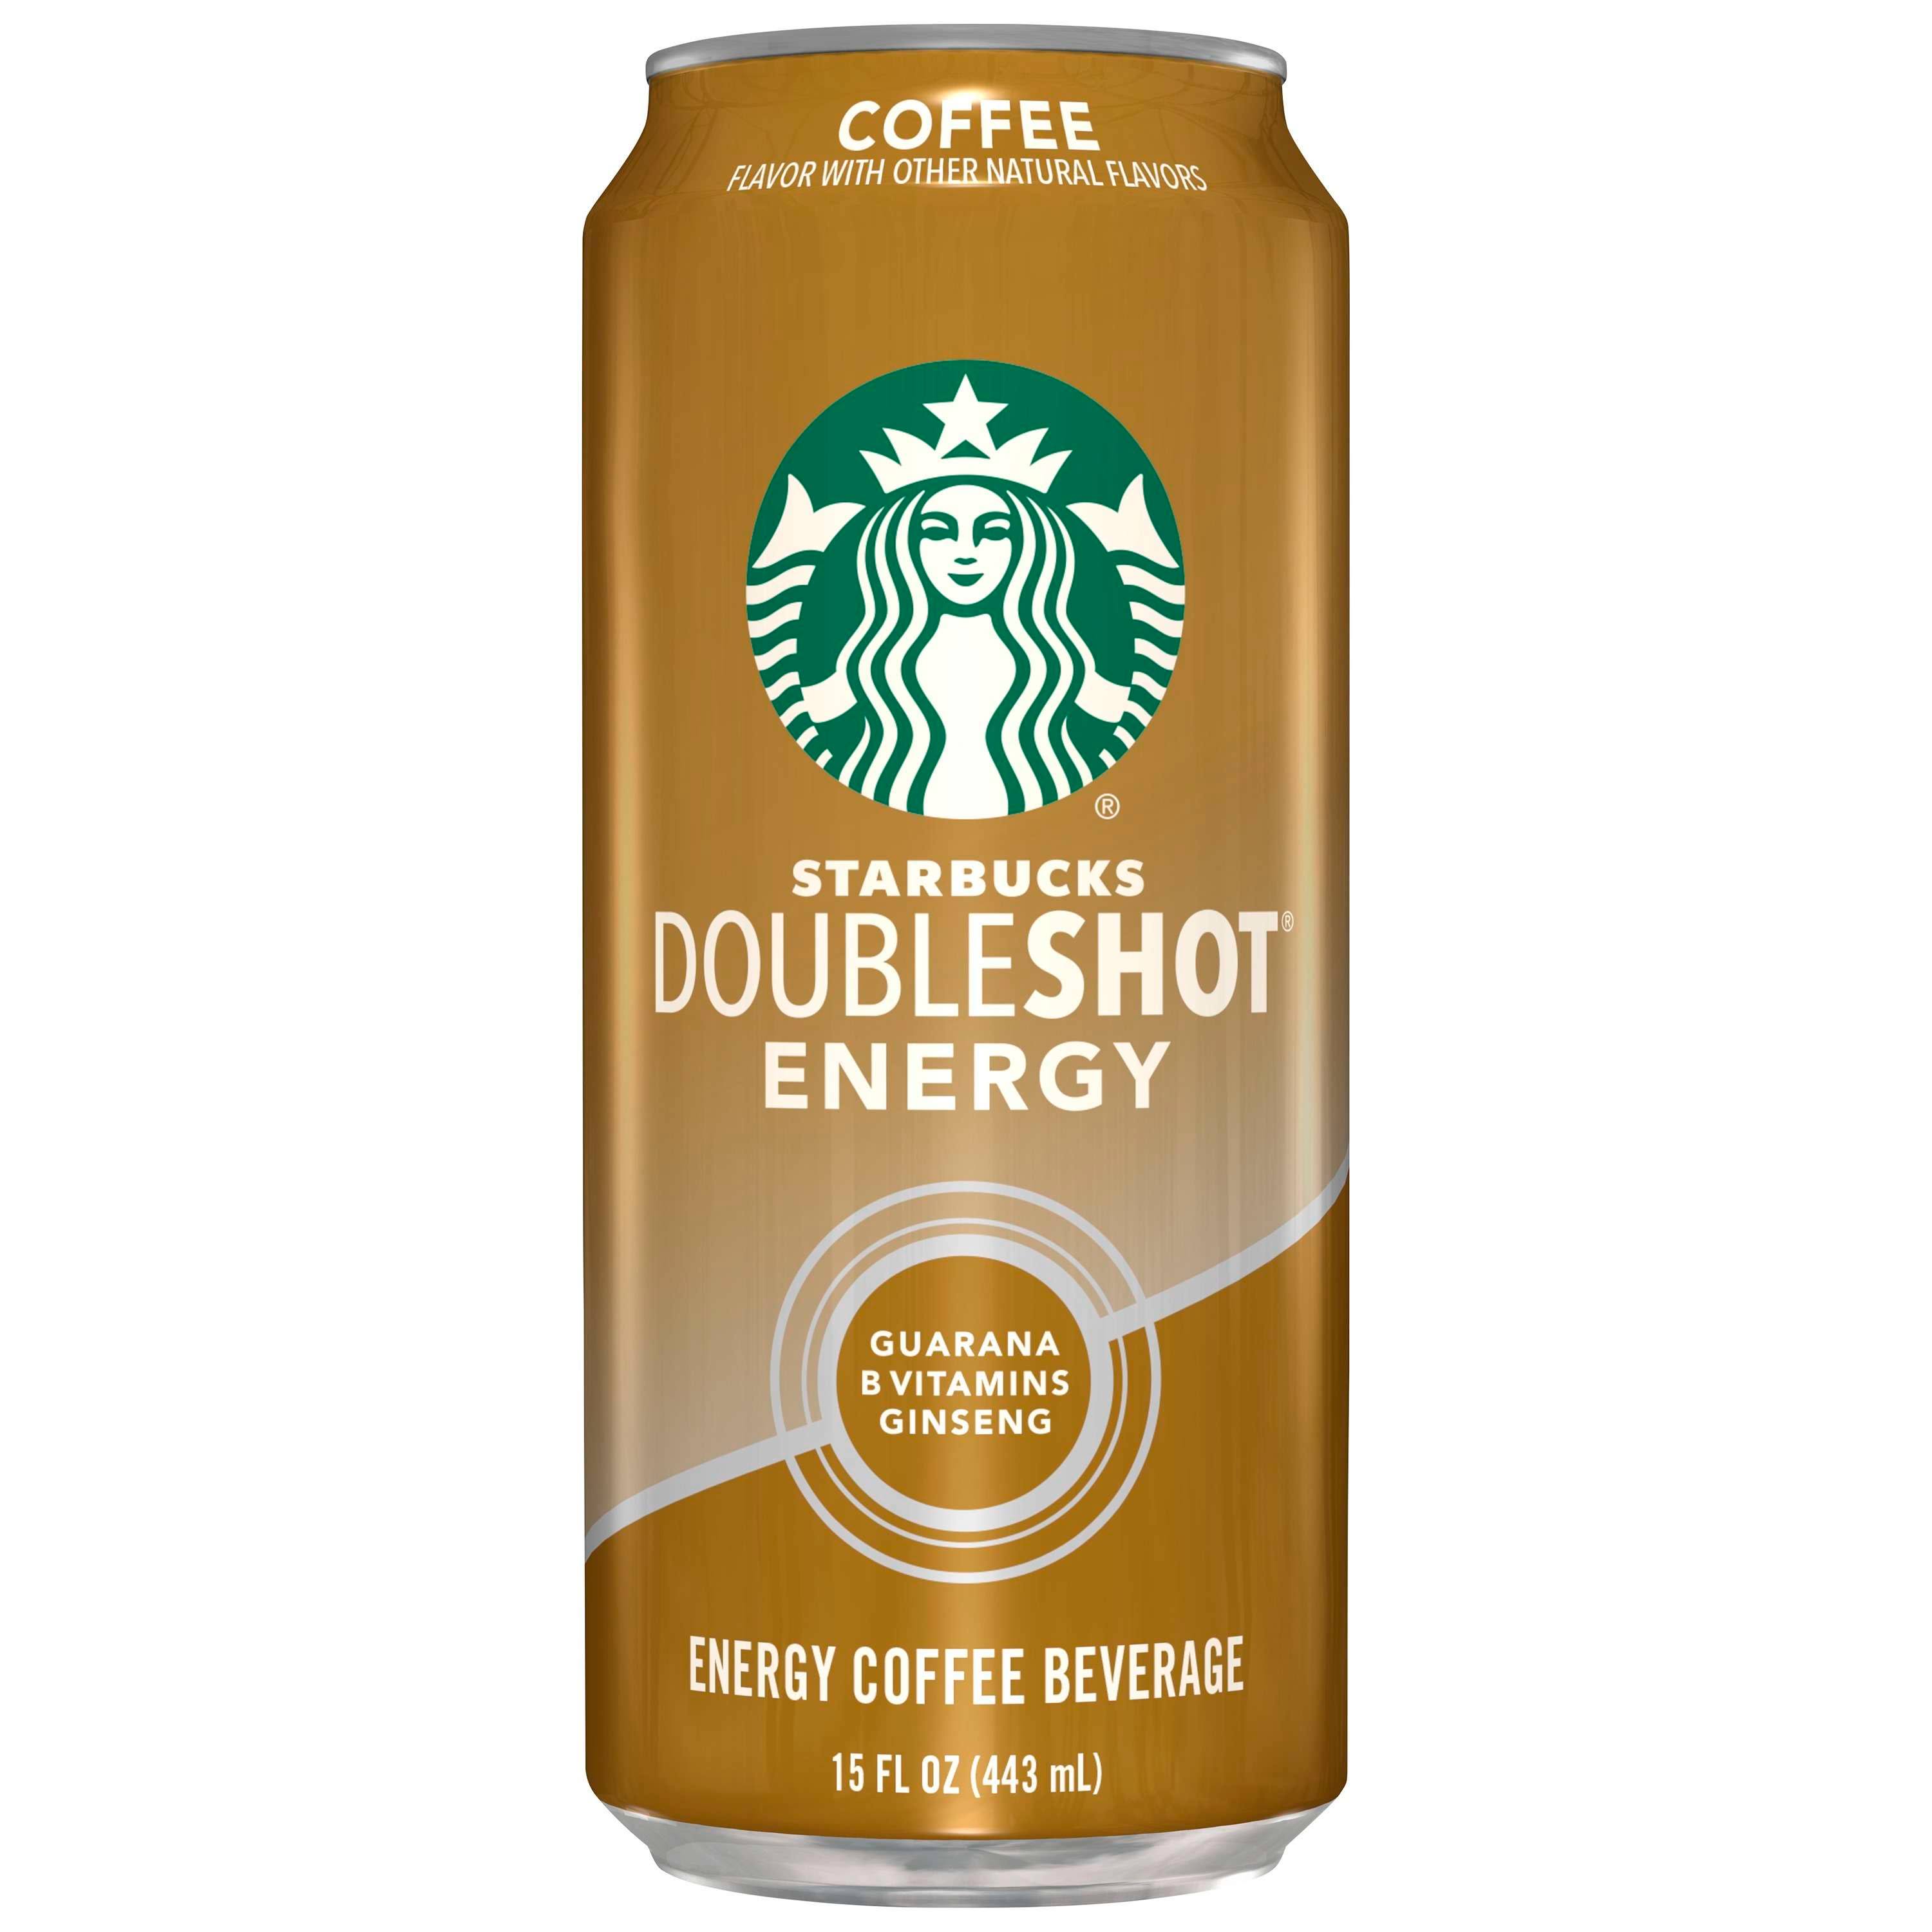 Starbucks Doubleshot Coffee Beverage, Energy - 15 fl oz